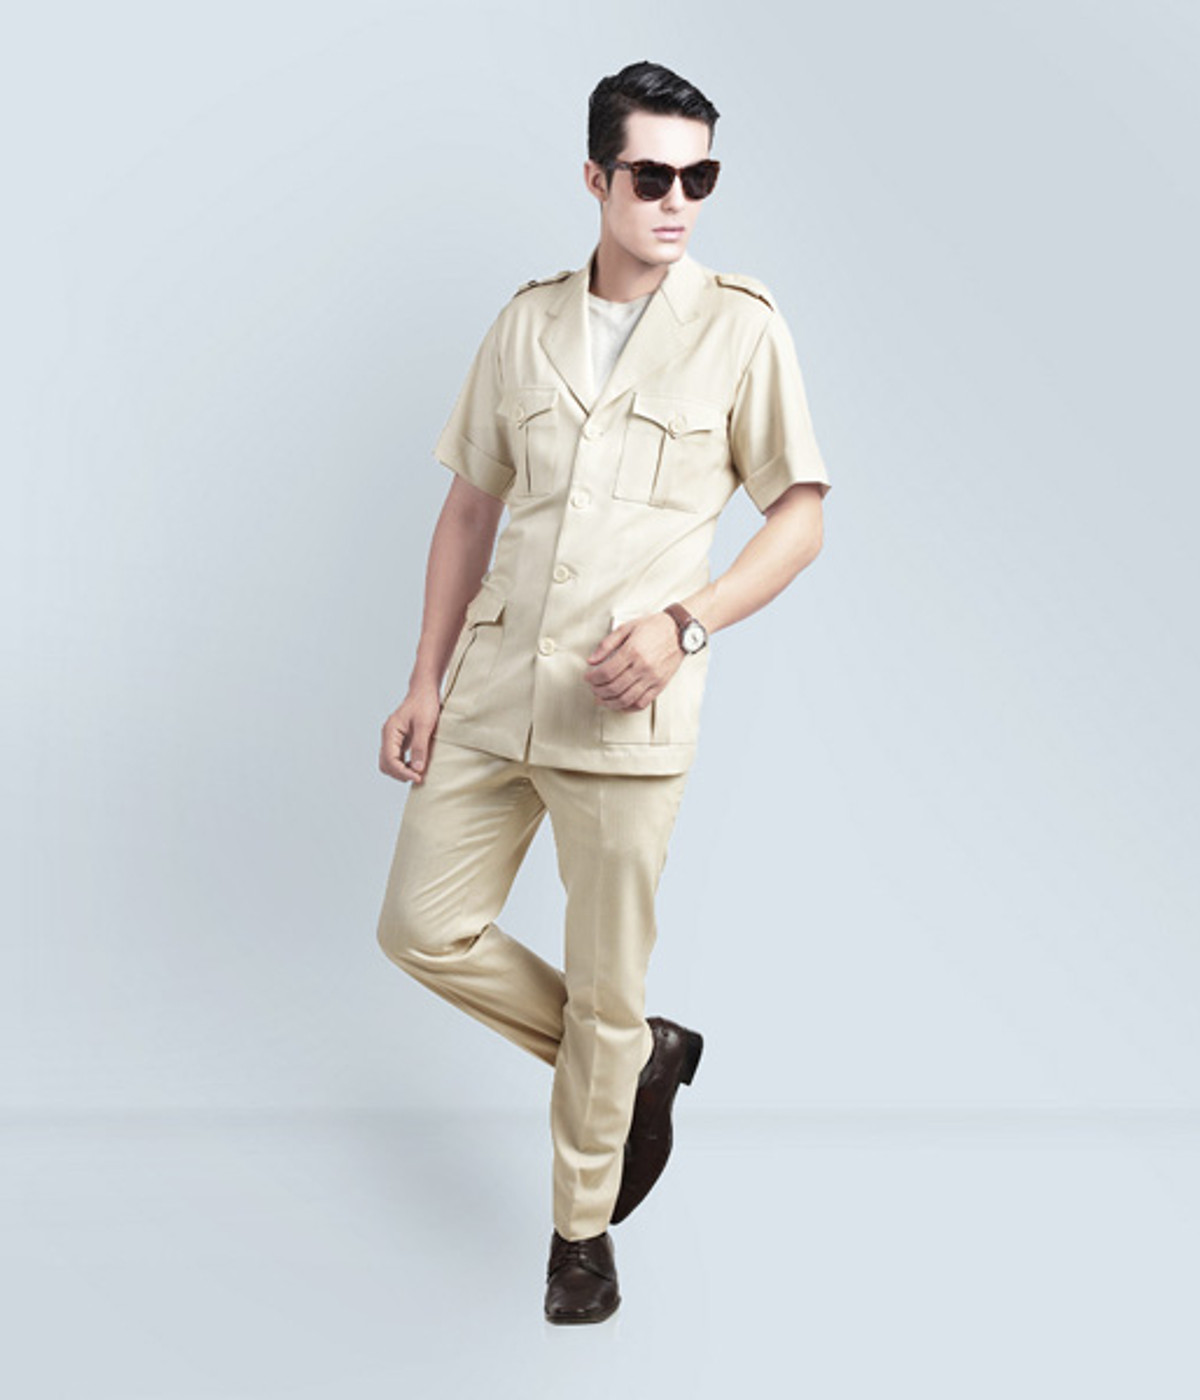 The Safari Suit Lucky Enemuo, Short Sleeve Safari Suit